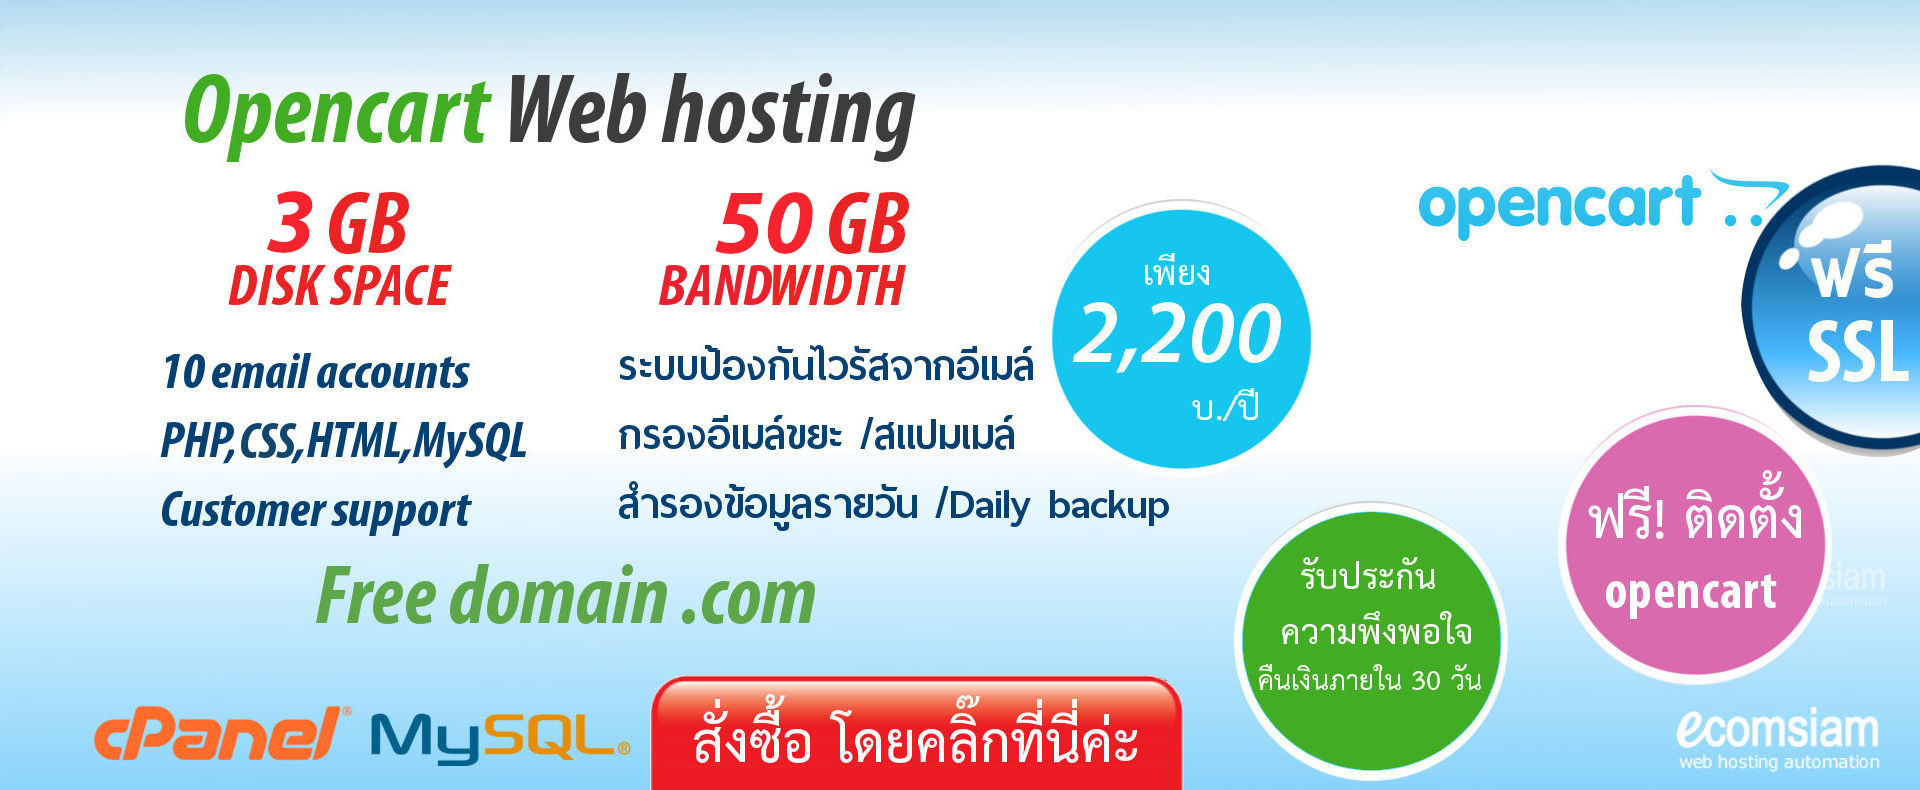 webhostthai web hosting แนะนำ Opencart web hosting thailand เพียง 2,200 บ./ปี เว็บโฮสติ้งไทย ฟรี โดเมน ฟรี SSL ฟรีติดตั้ง แนะนำเว็บโฮสติ้ง บริการลูกค้า  Support ดูแลดี โดย webhostthai.com - opencart web hosting thailand free domain